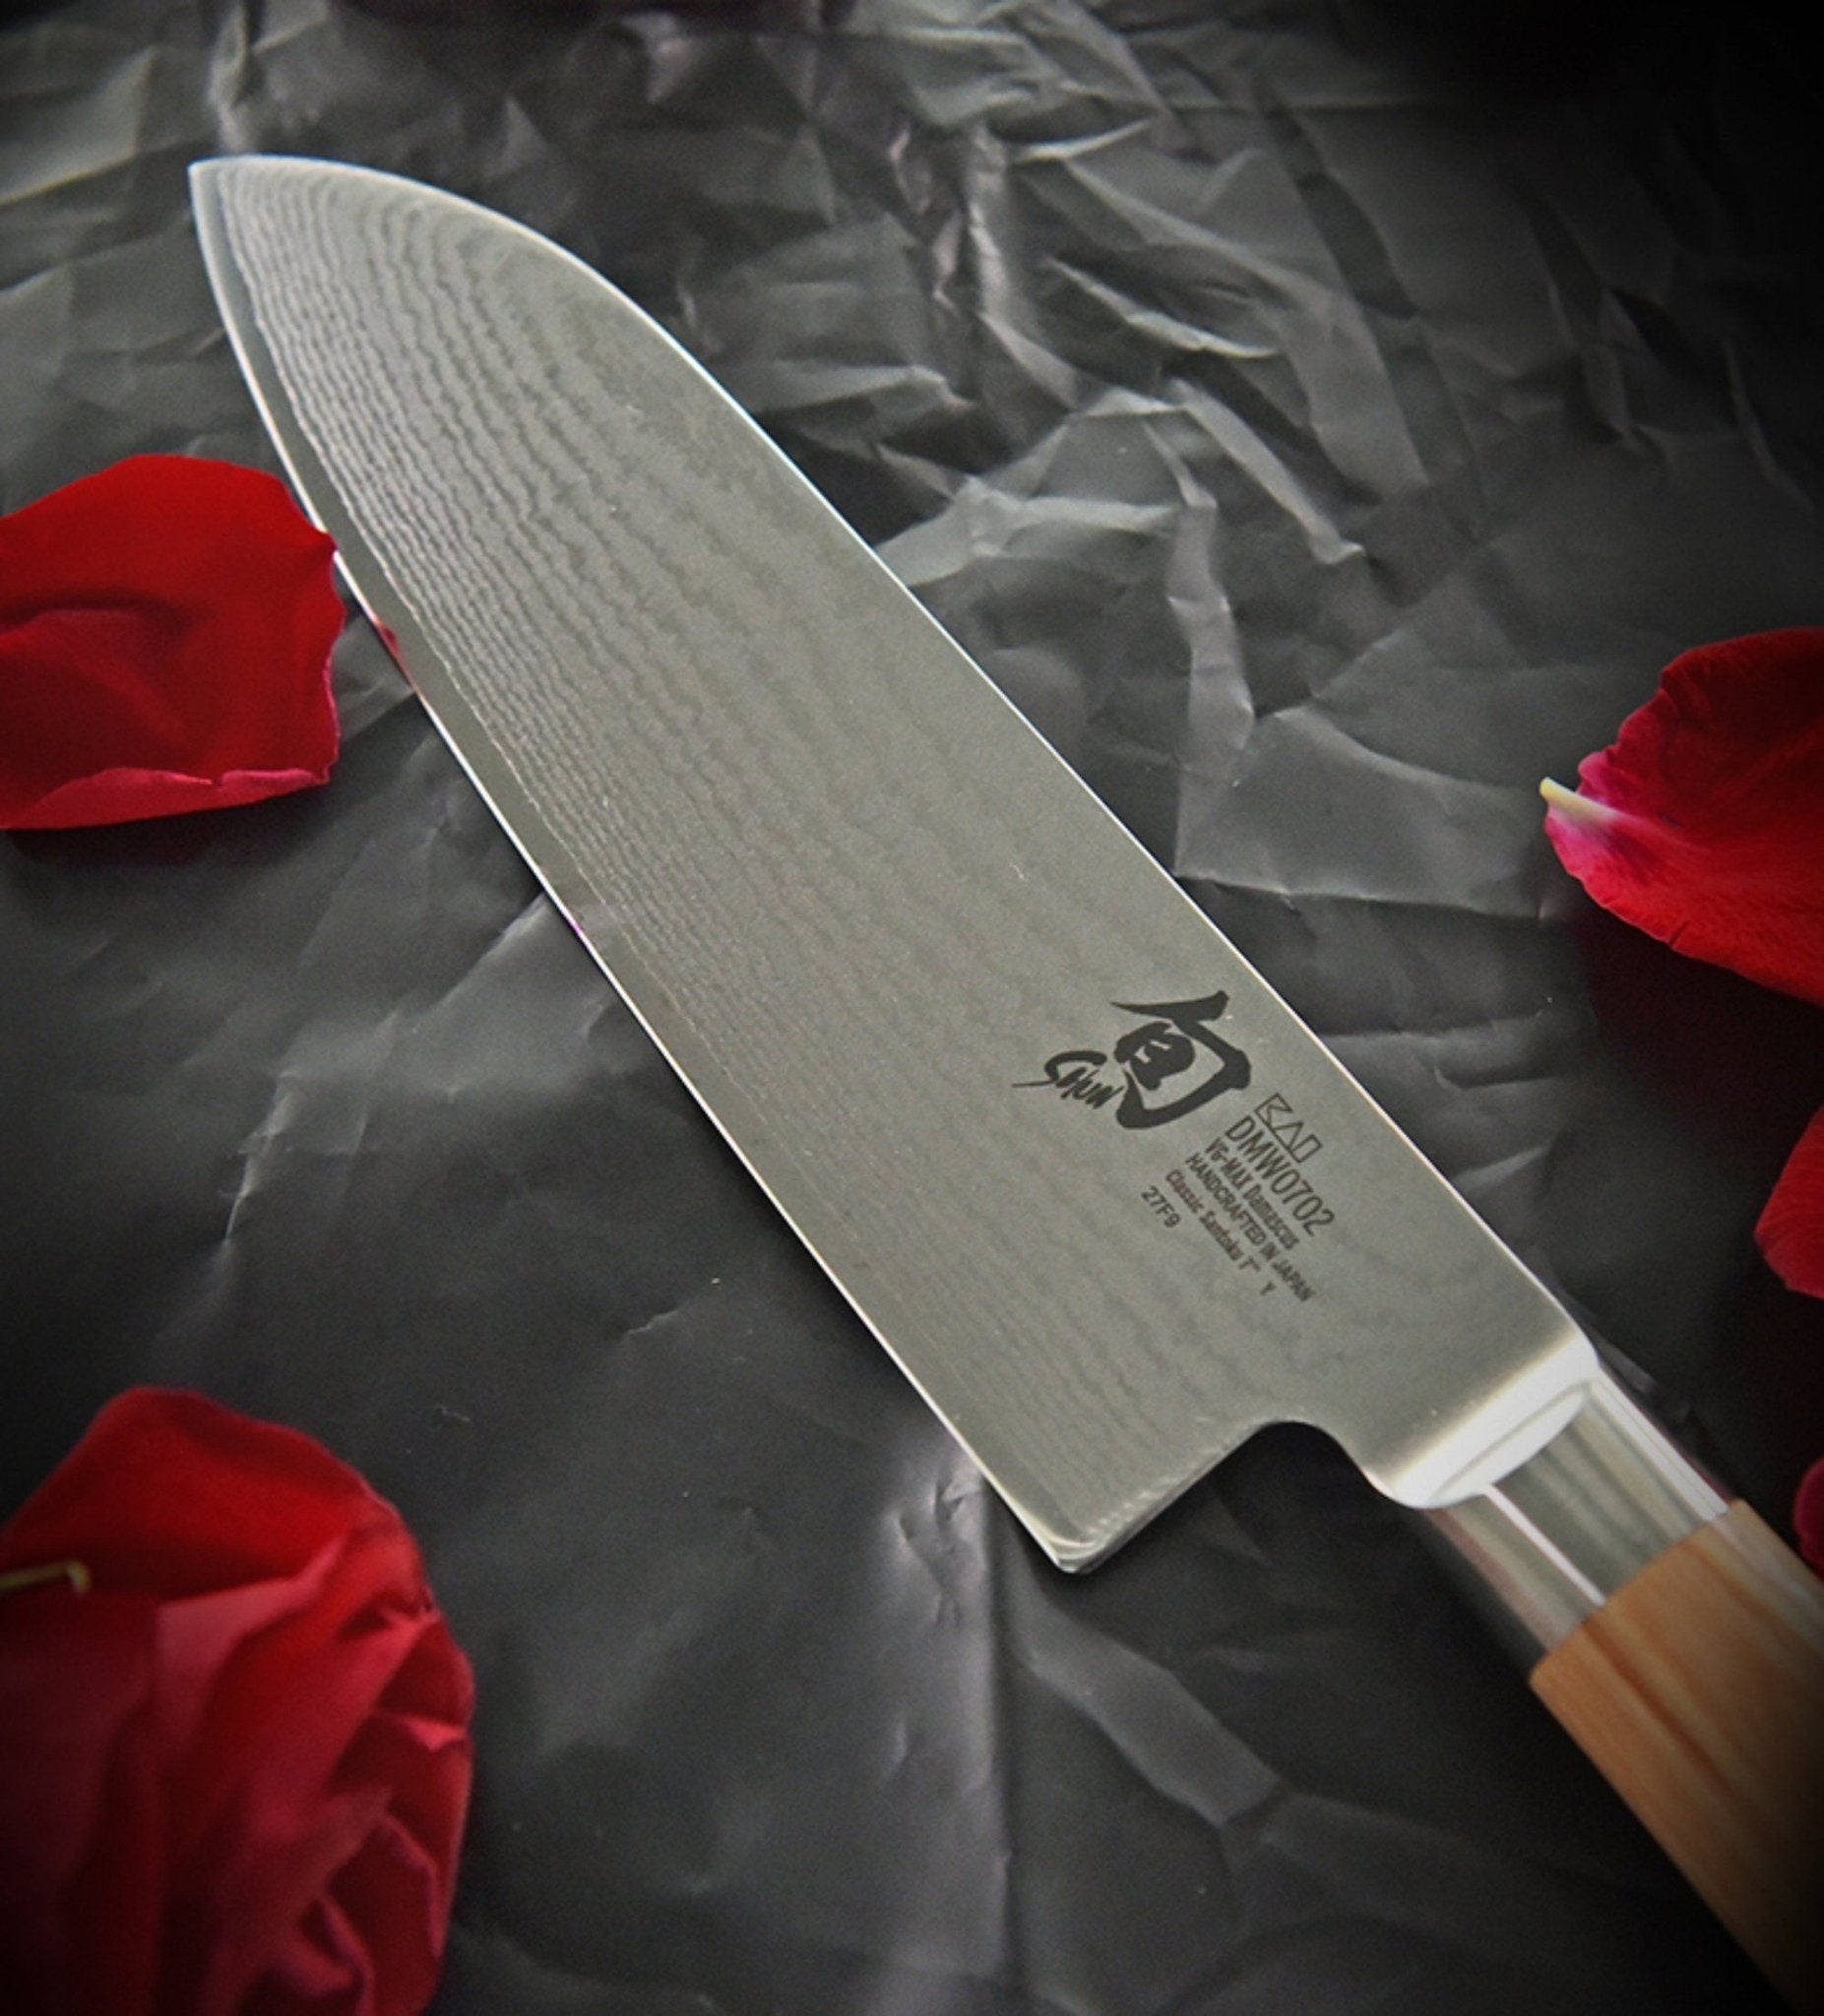 Japanese Handcrafted knife Damascus Steel Knife, Santoku | Made In Japan, Kitchen Knife, - -